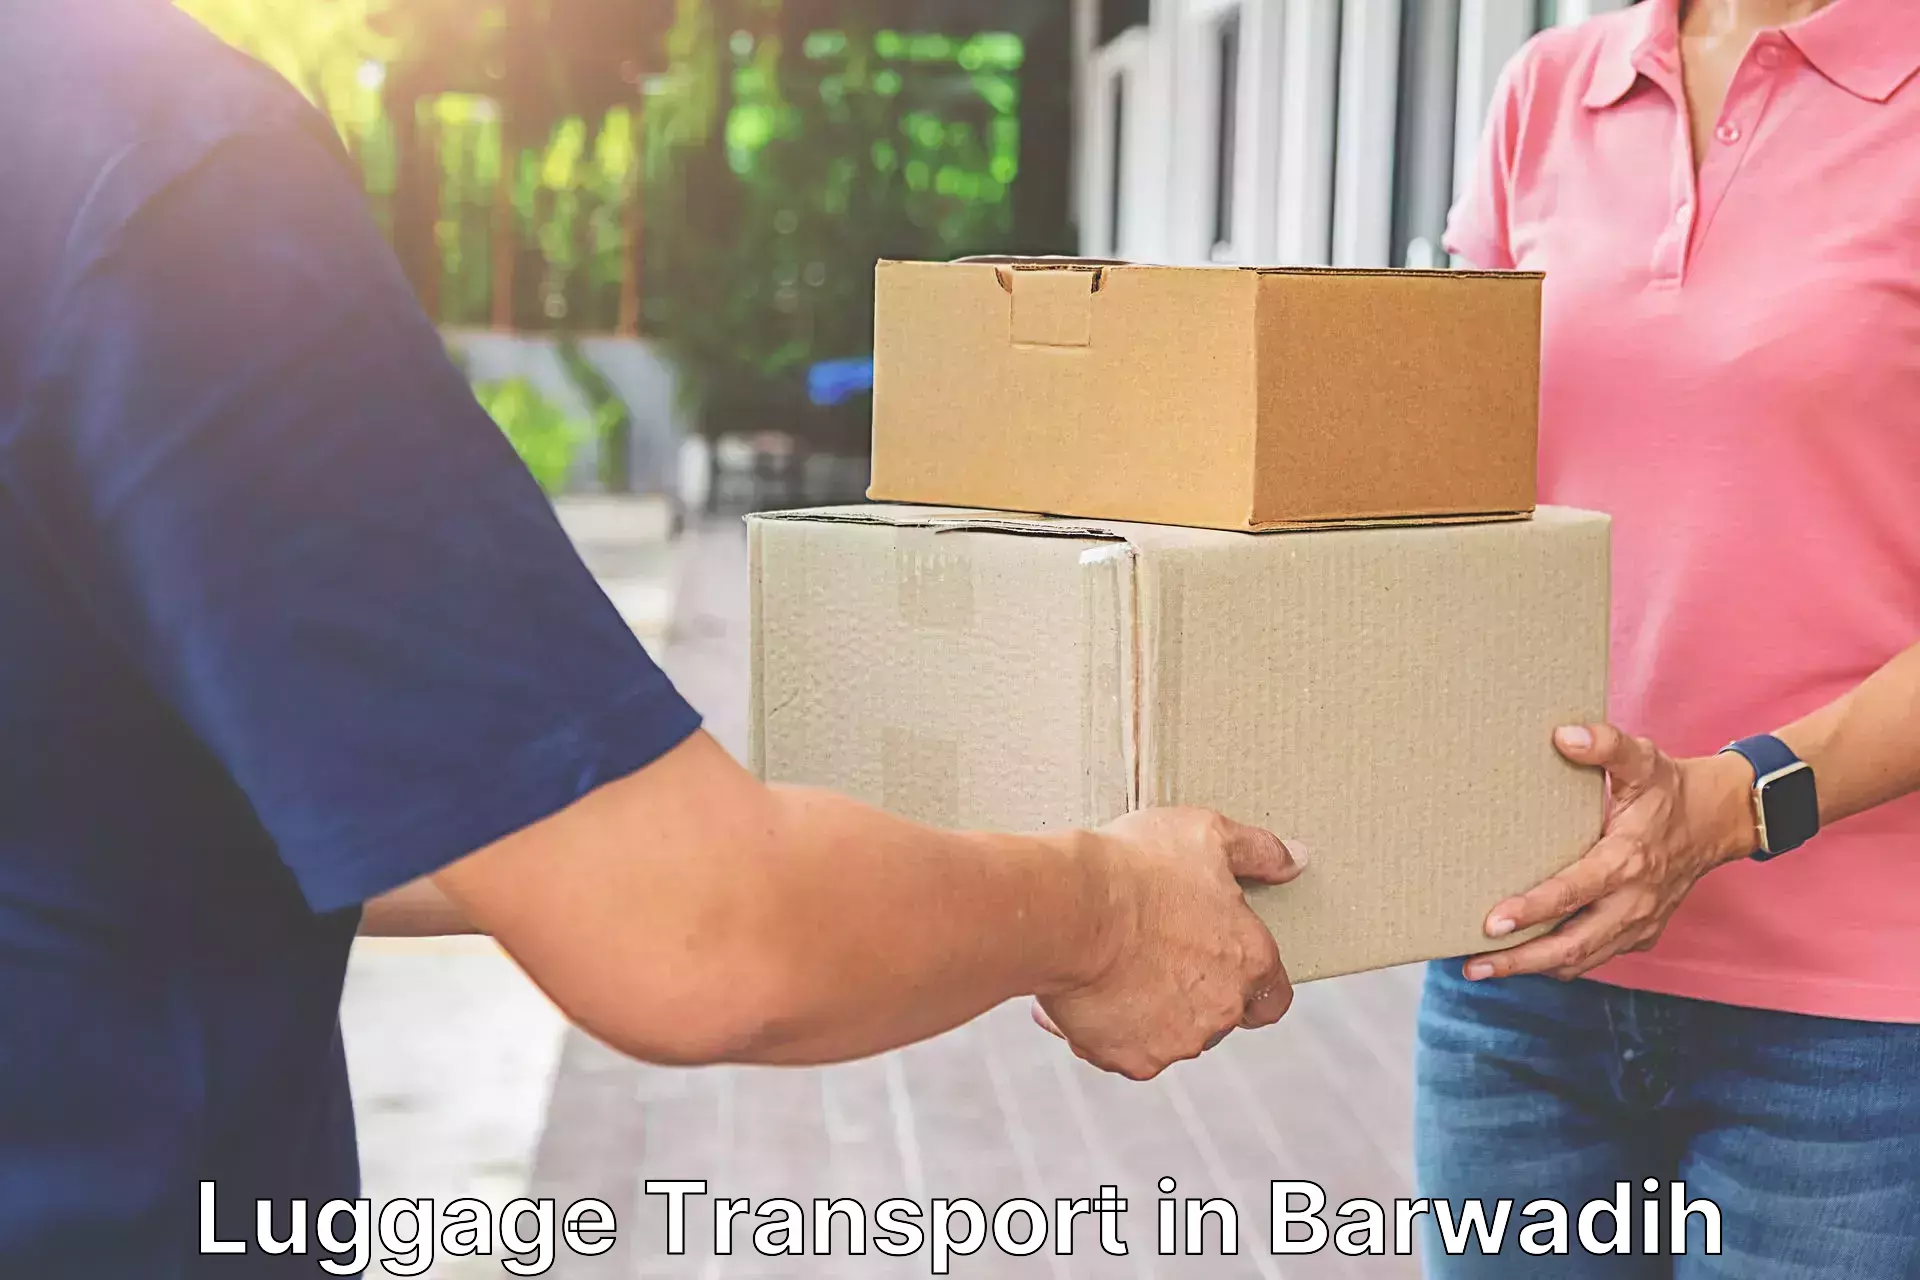 Luggage transport operations in Barwadih